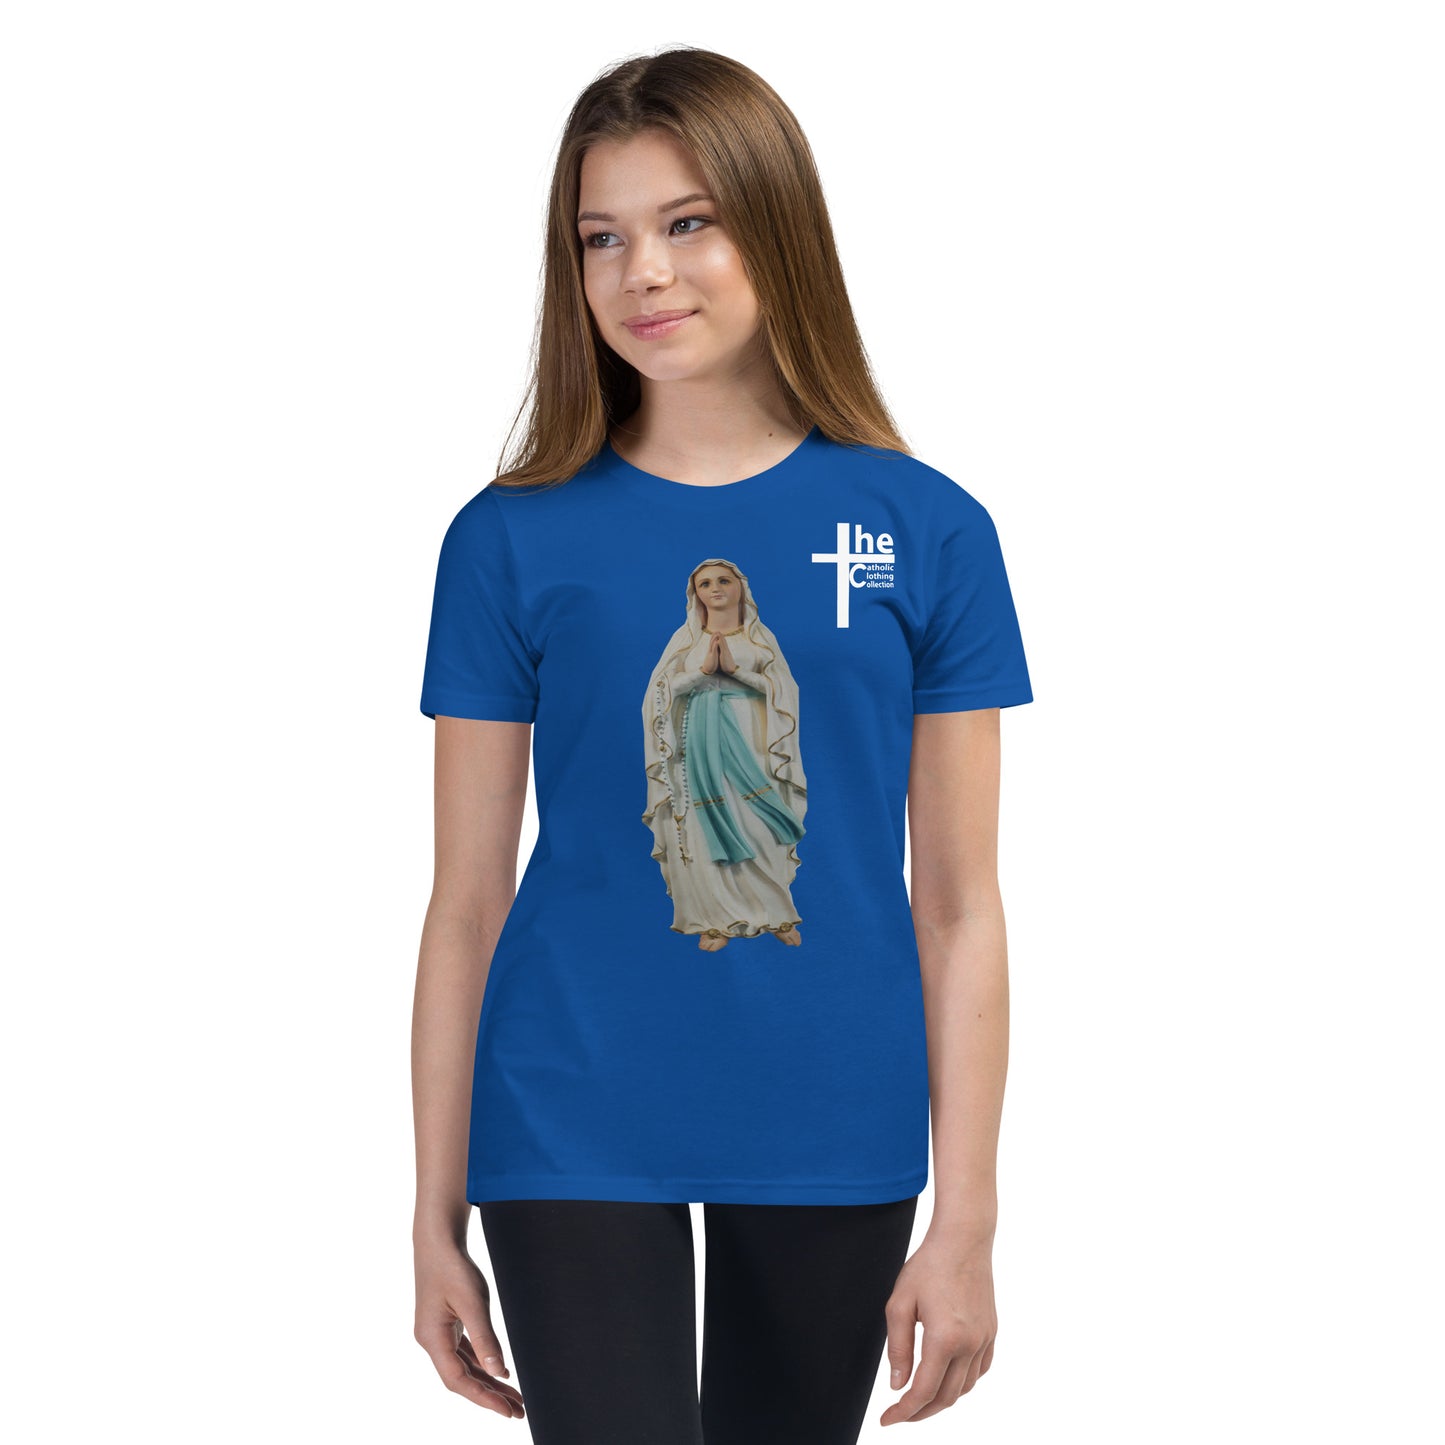 Our Lady of Lourdes Children's t-Shirt